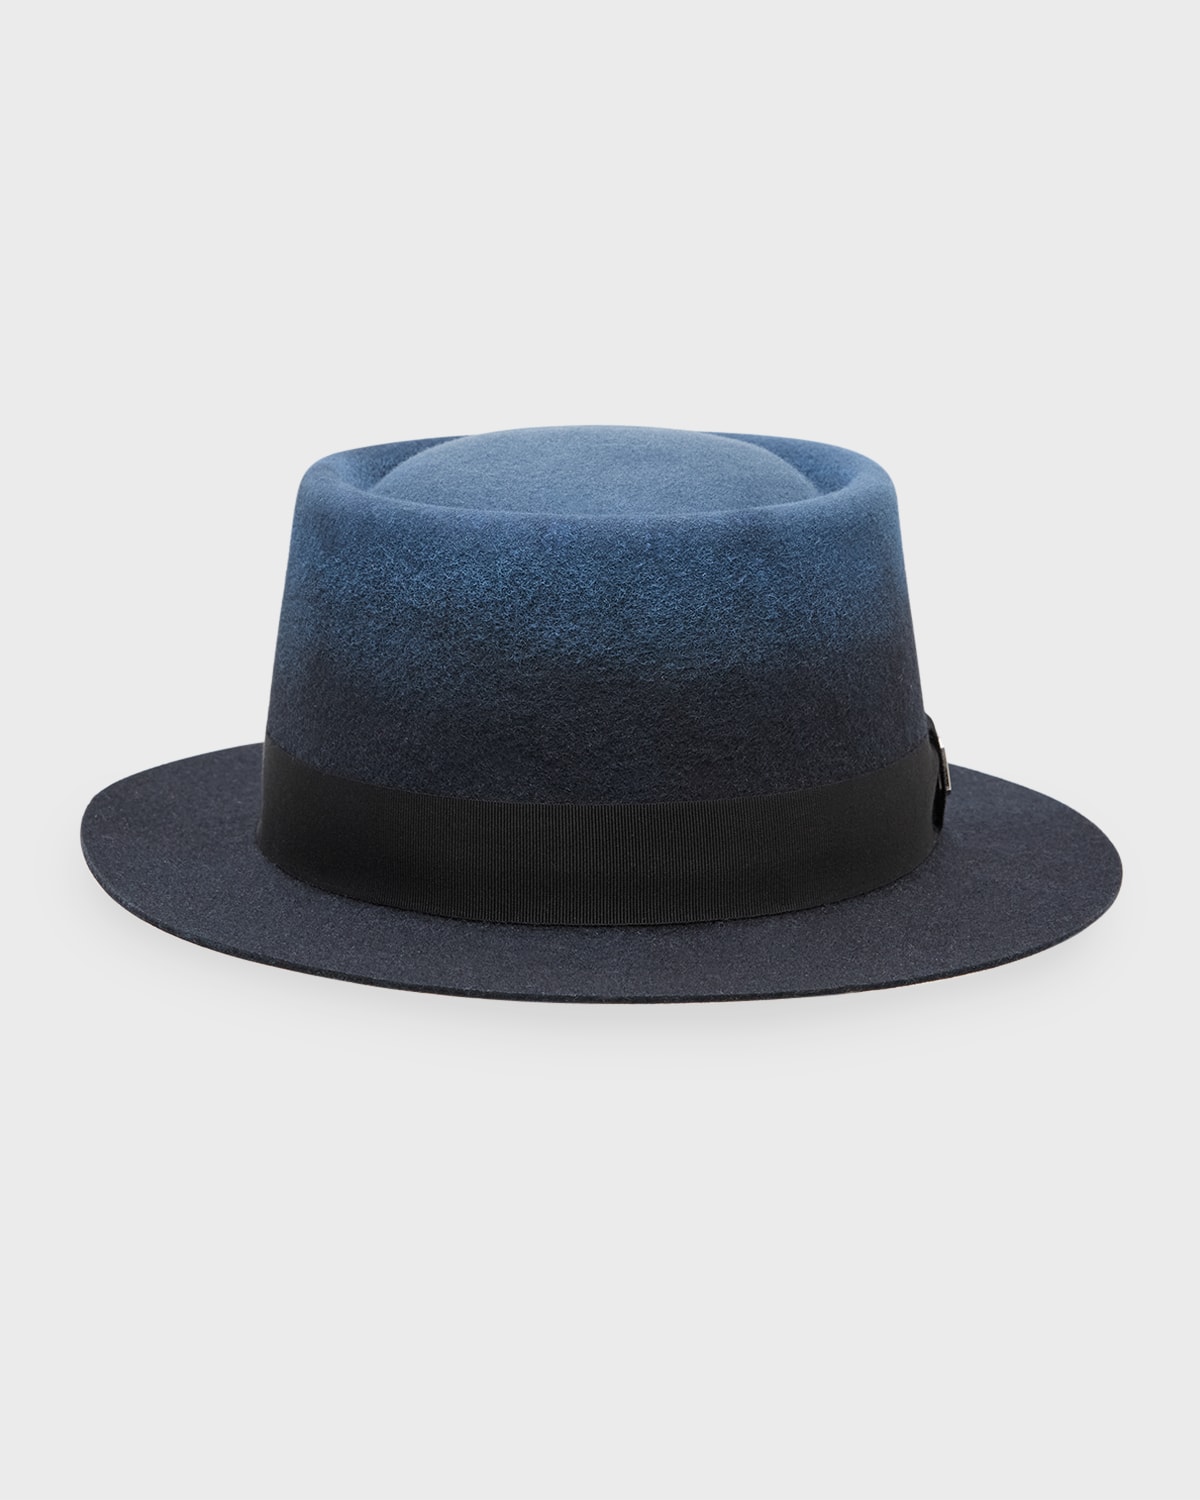 Christian Louboutin Men's Andaloubi Wool Degrade Fedora Hat